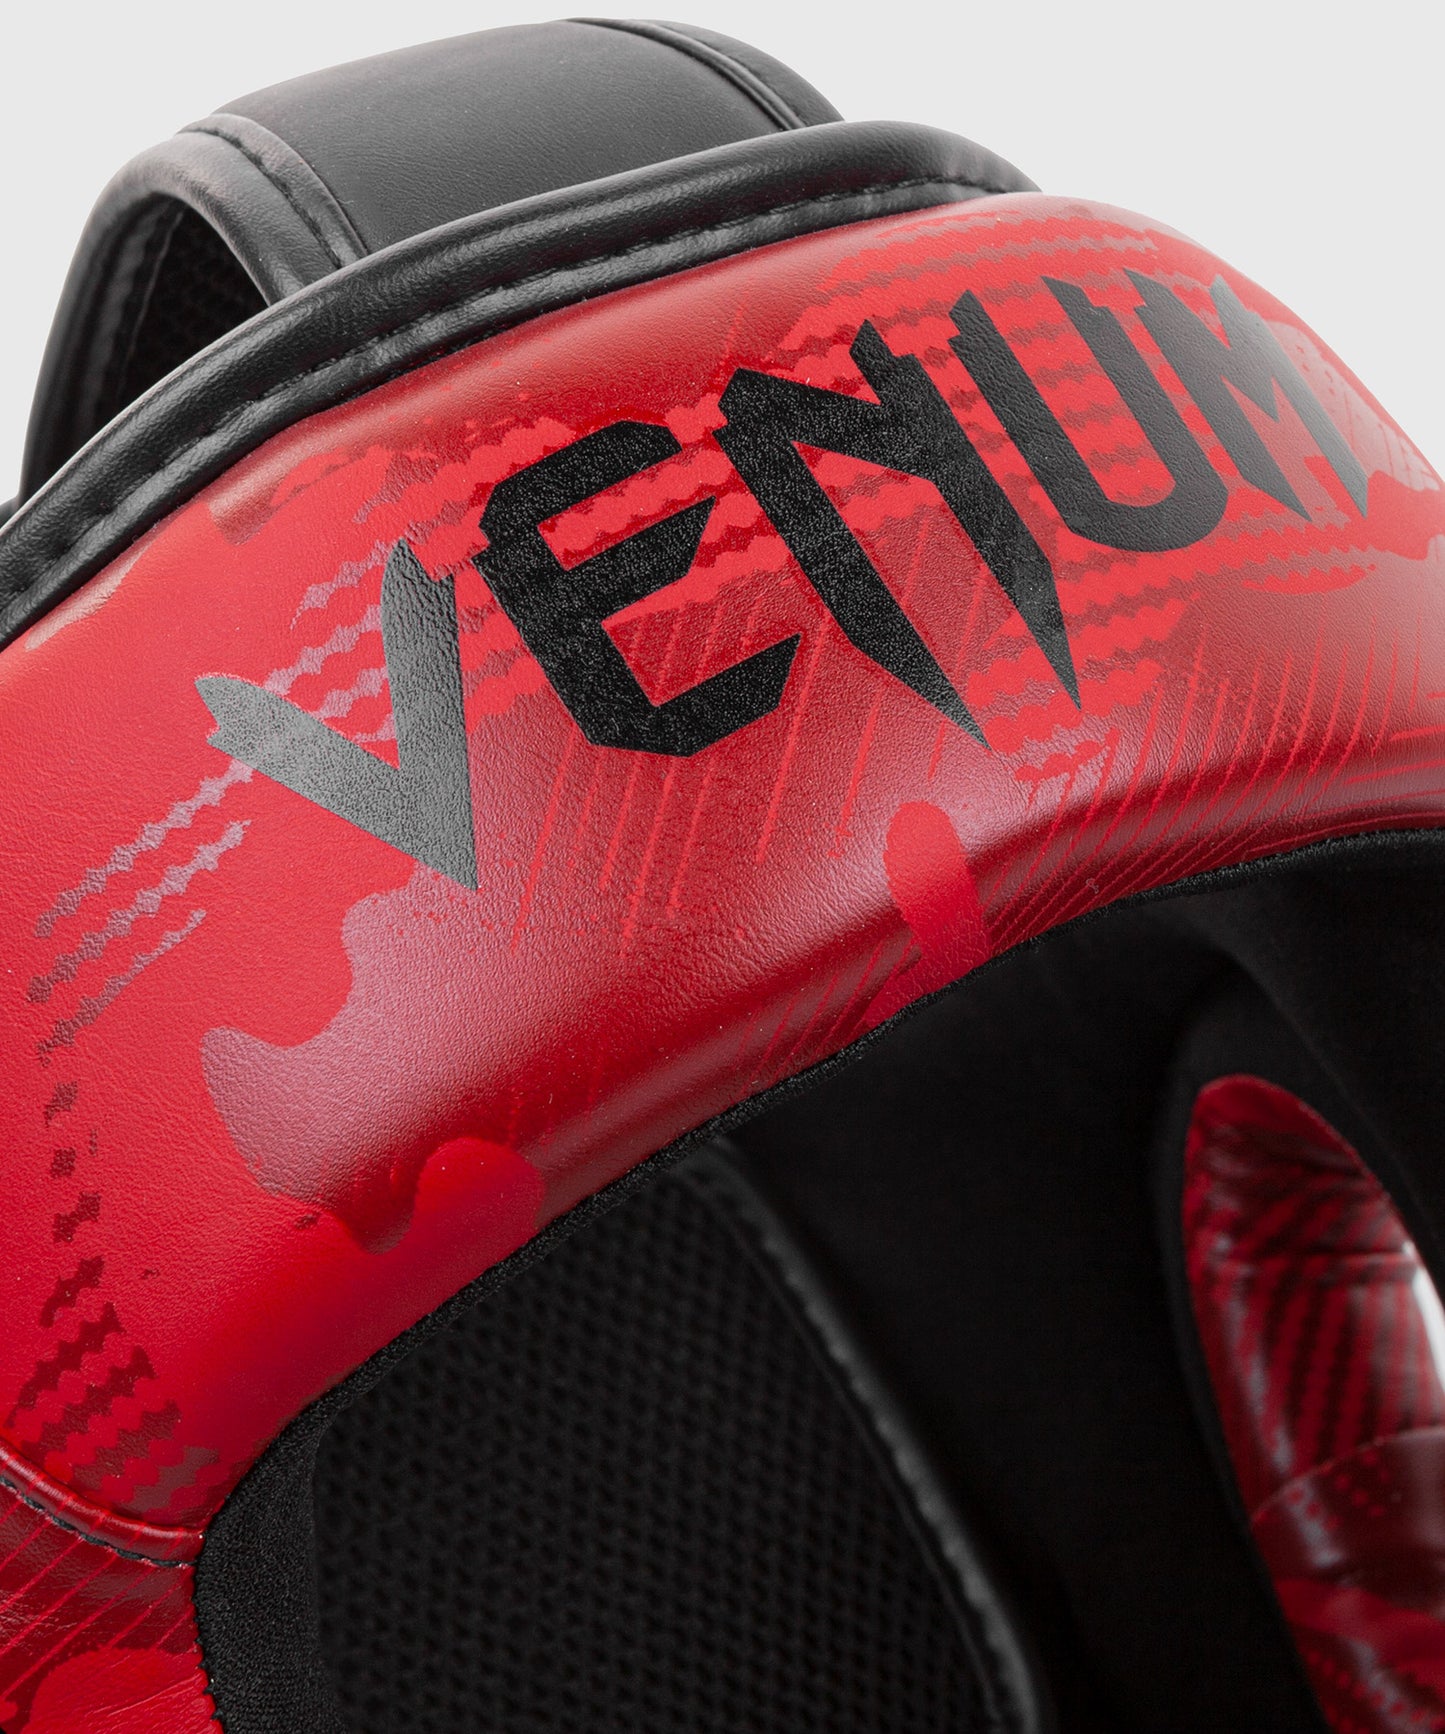 Venum Elite Boxing Headgear - Red Camo